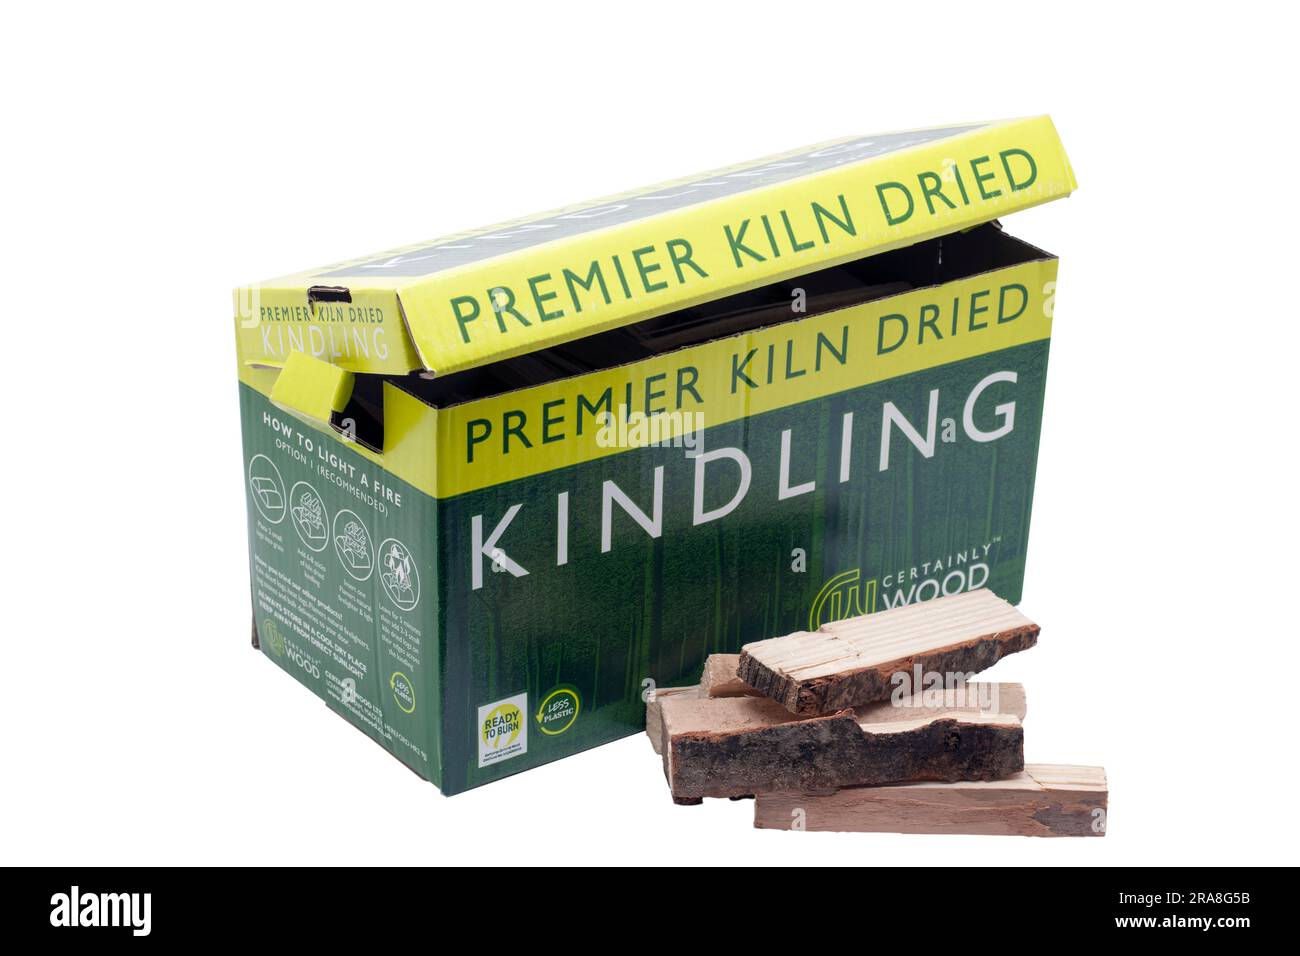 Box of Premier Kiln Dried Kindling Stock Photo